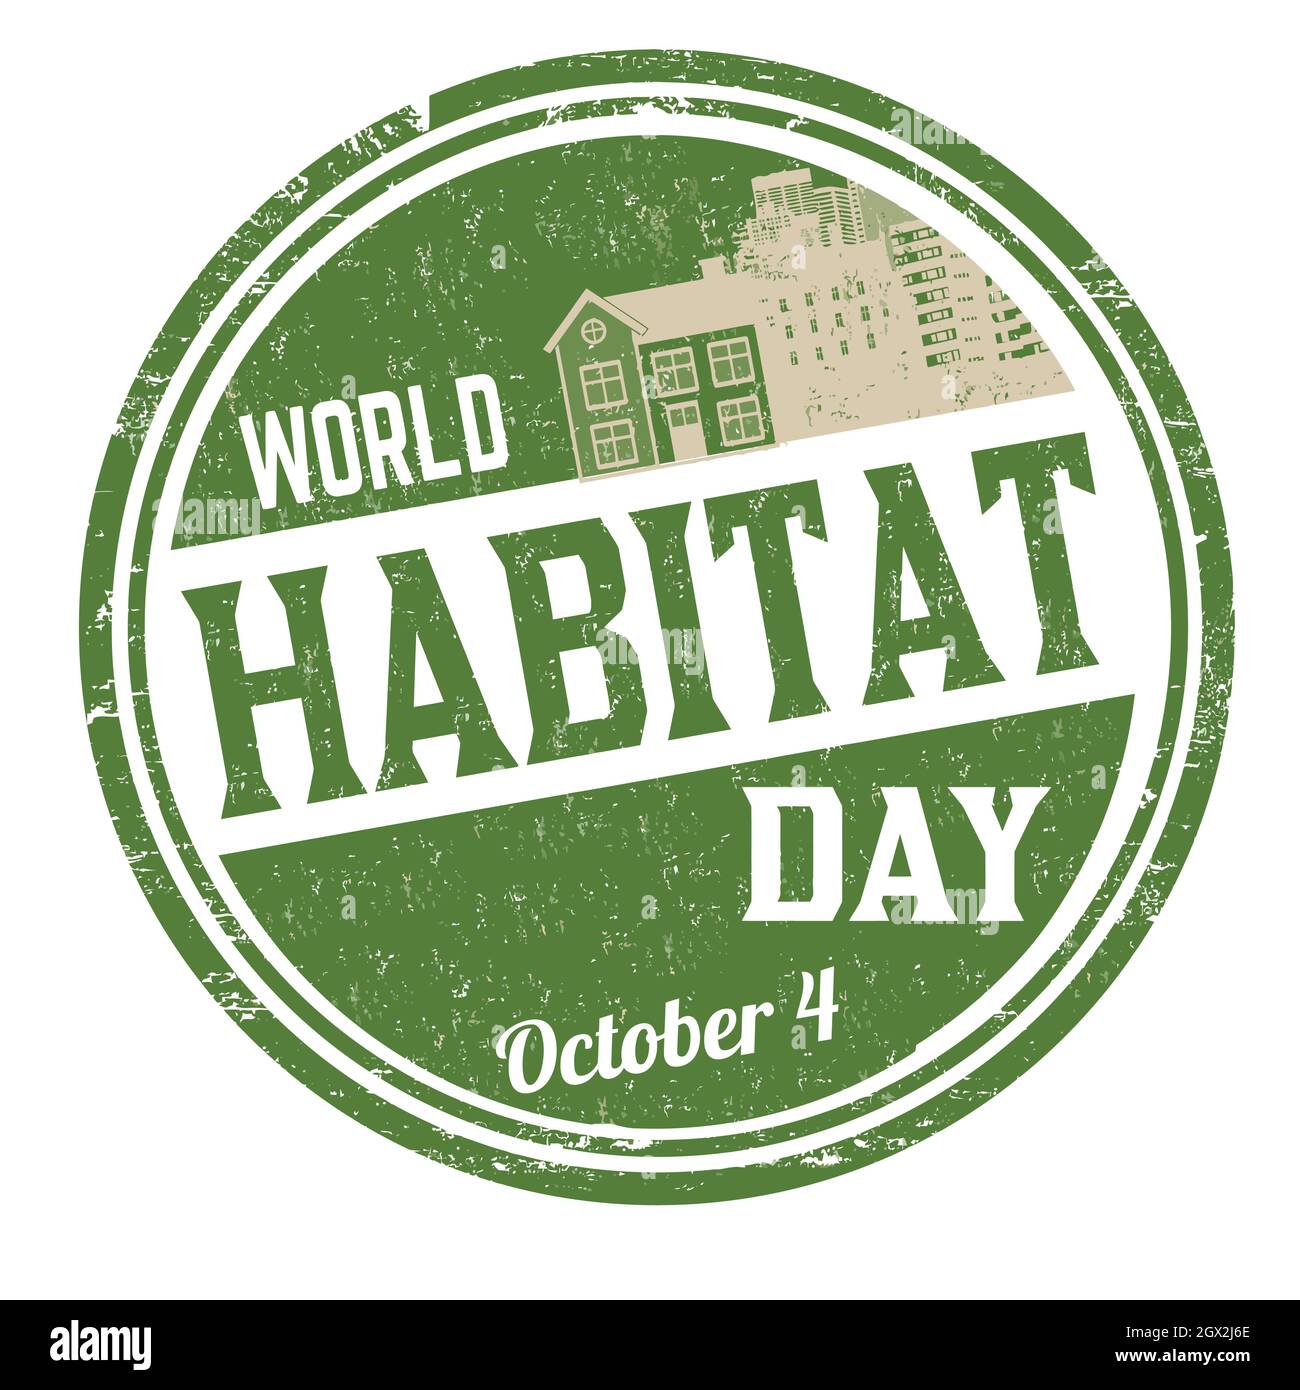 World habitat day grunge rubber stamp on white background, vector illustration Stock Vector